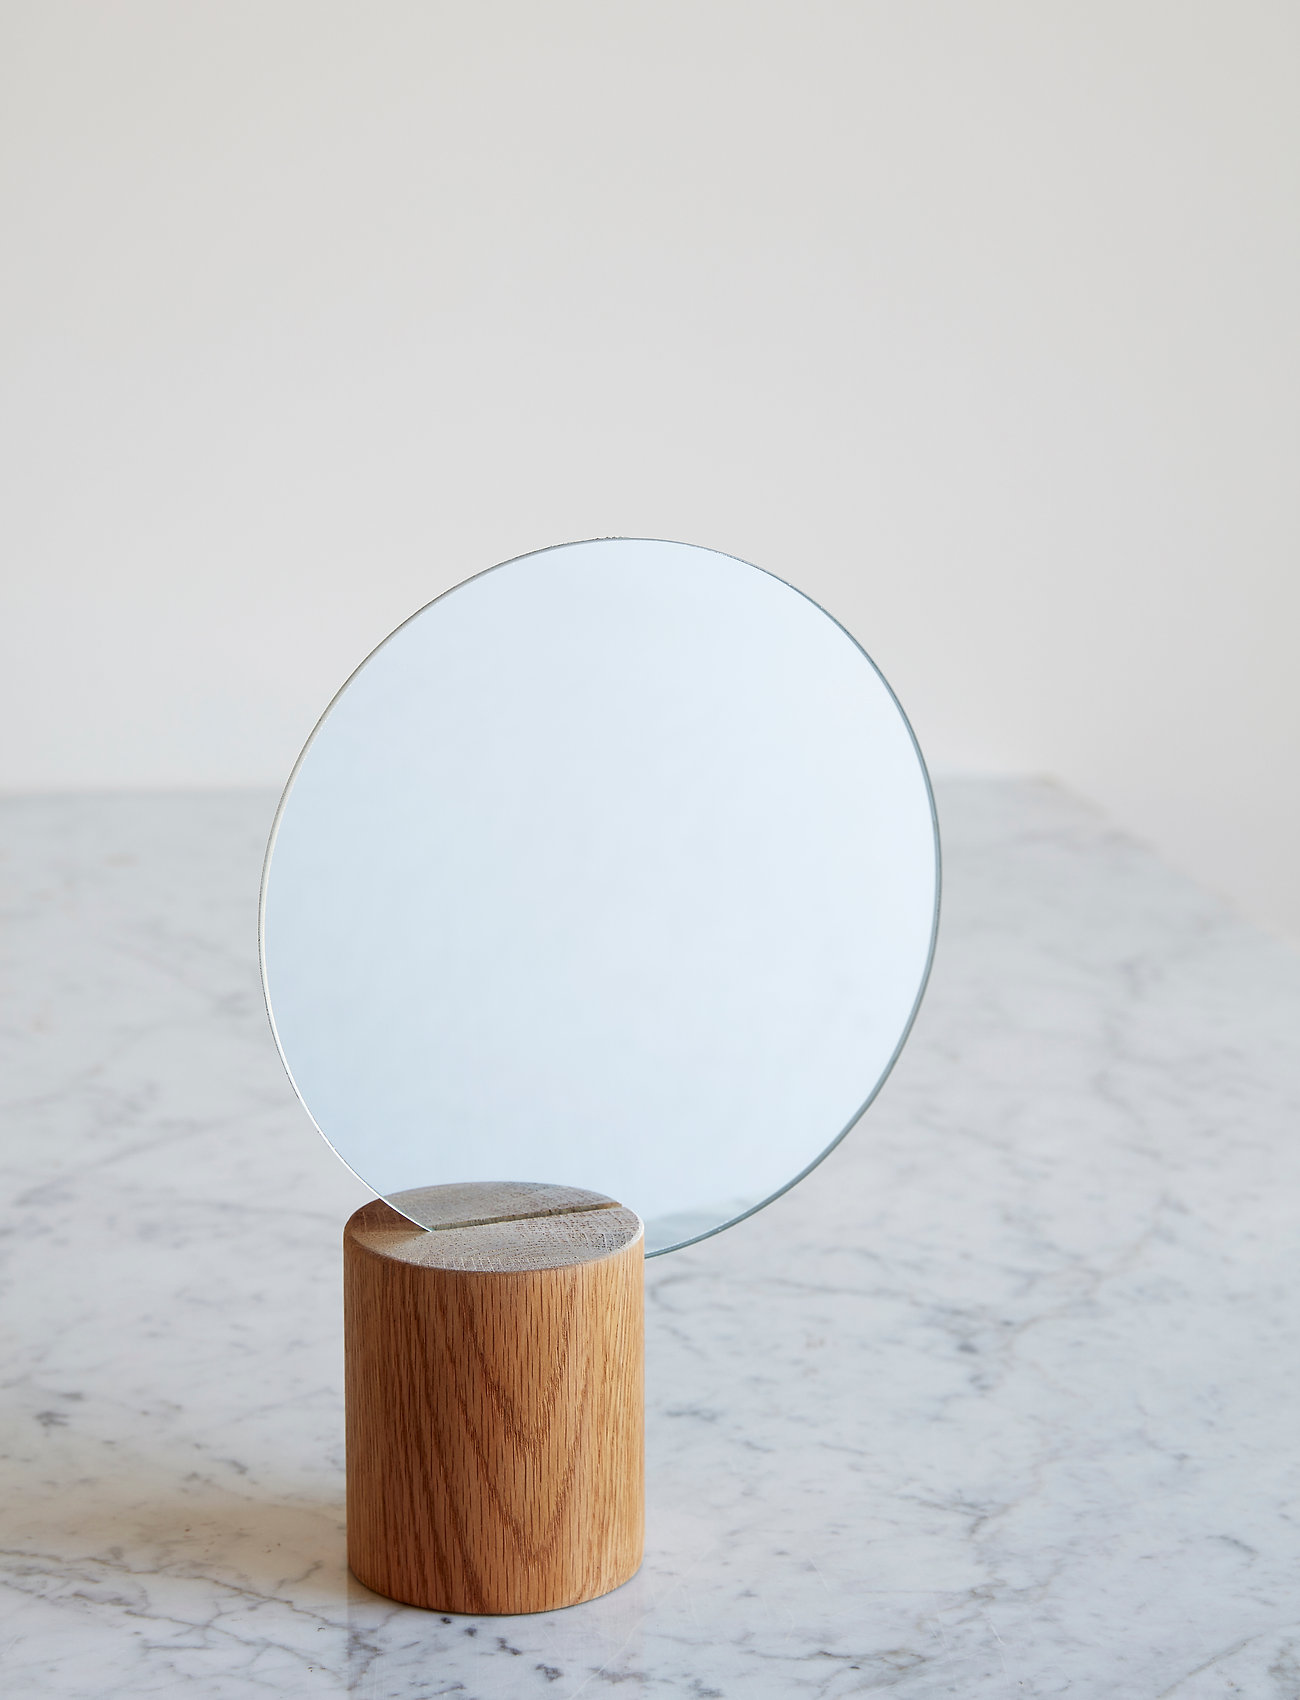 Hübsch - Edge Table Mirror - apaļi spoguļi - nature - 1